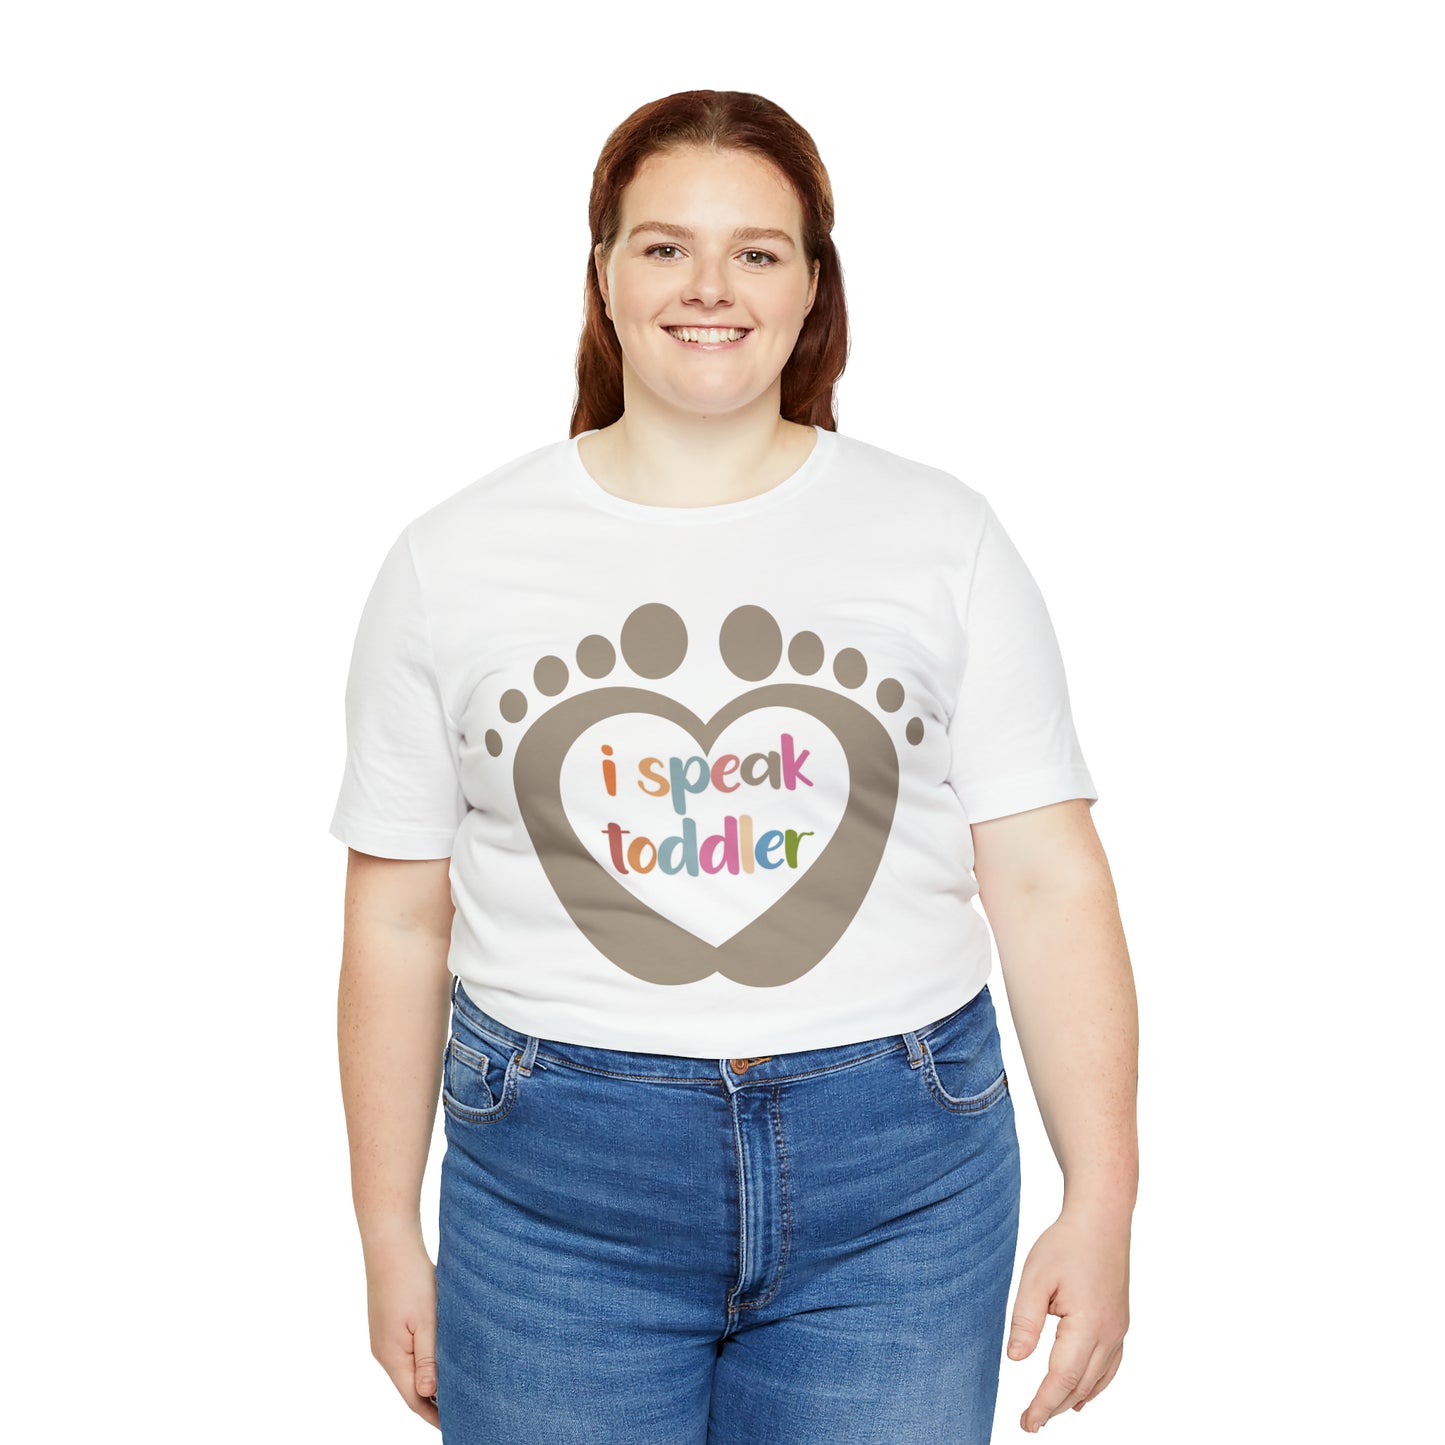 Daycare Provider Shirt, I Speak Toddler Shirt, Preschool Teacher Shirt, Daycare Provider Shirt, Motherhood Shirt, T379